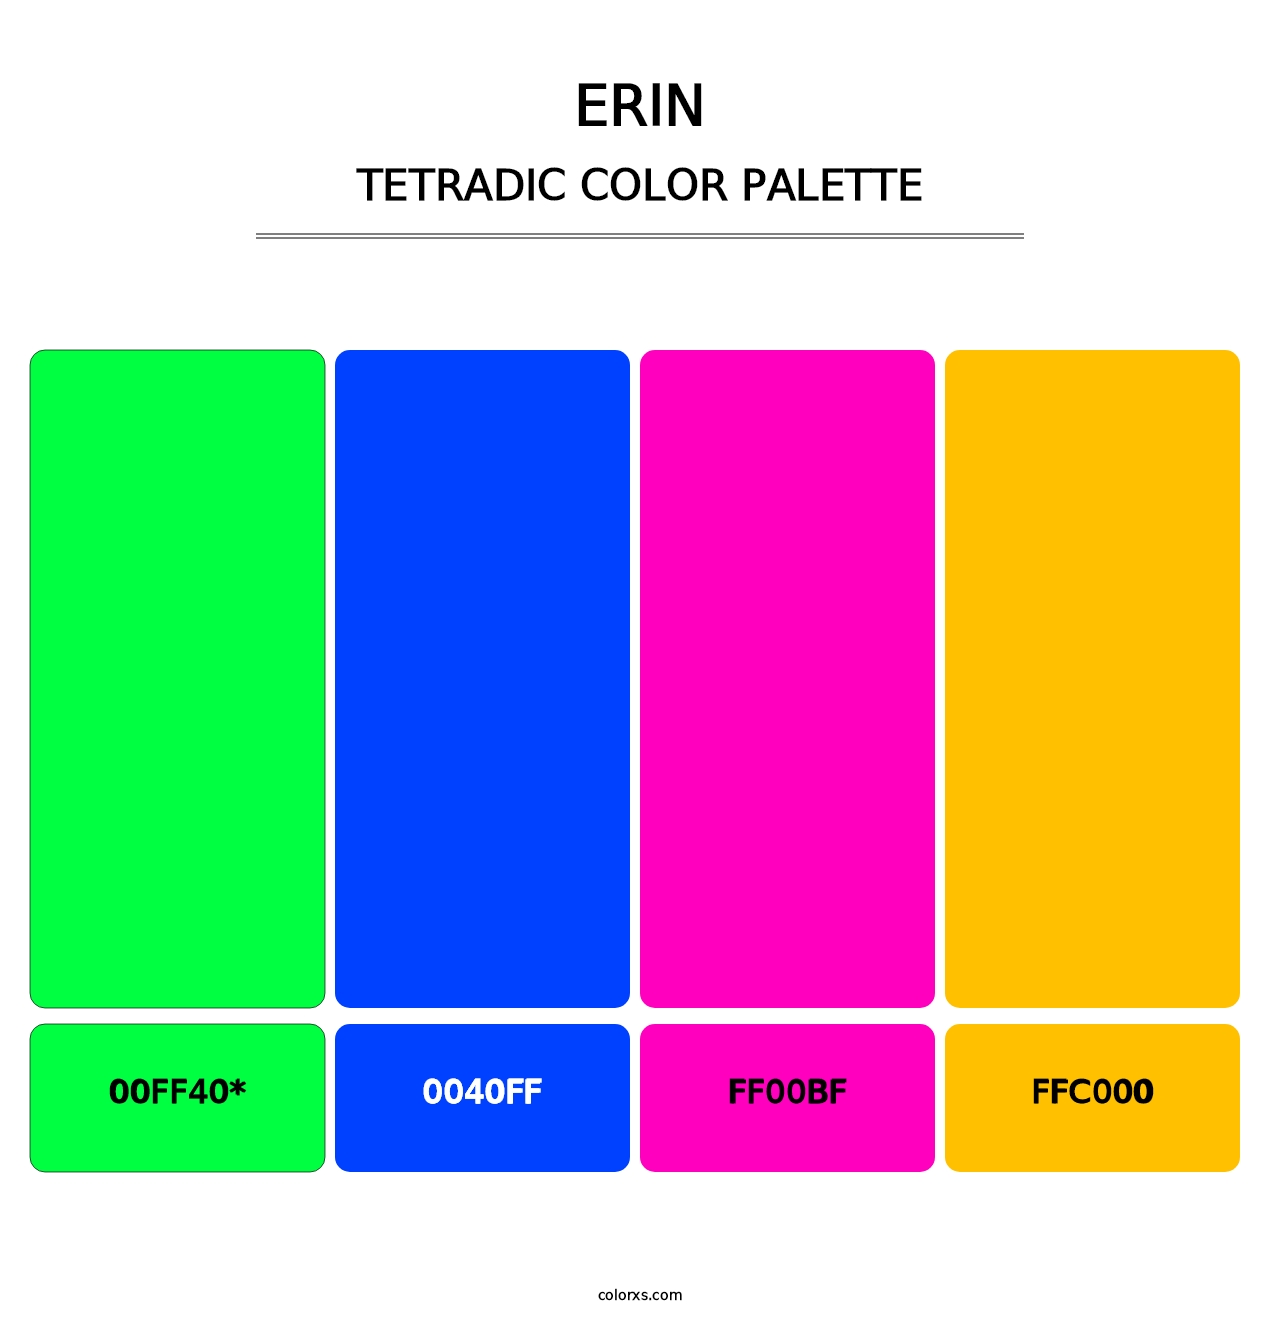 Erin - Tetradic Color Palette